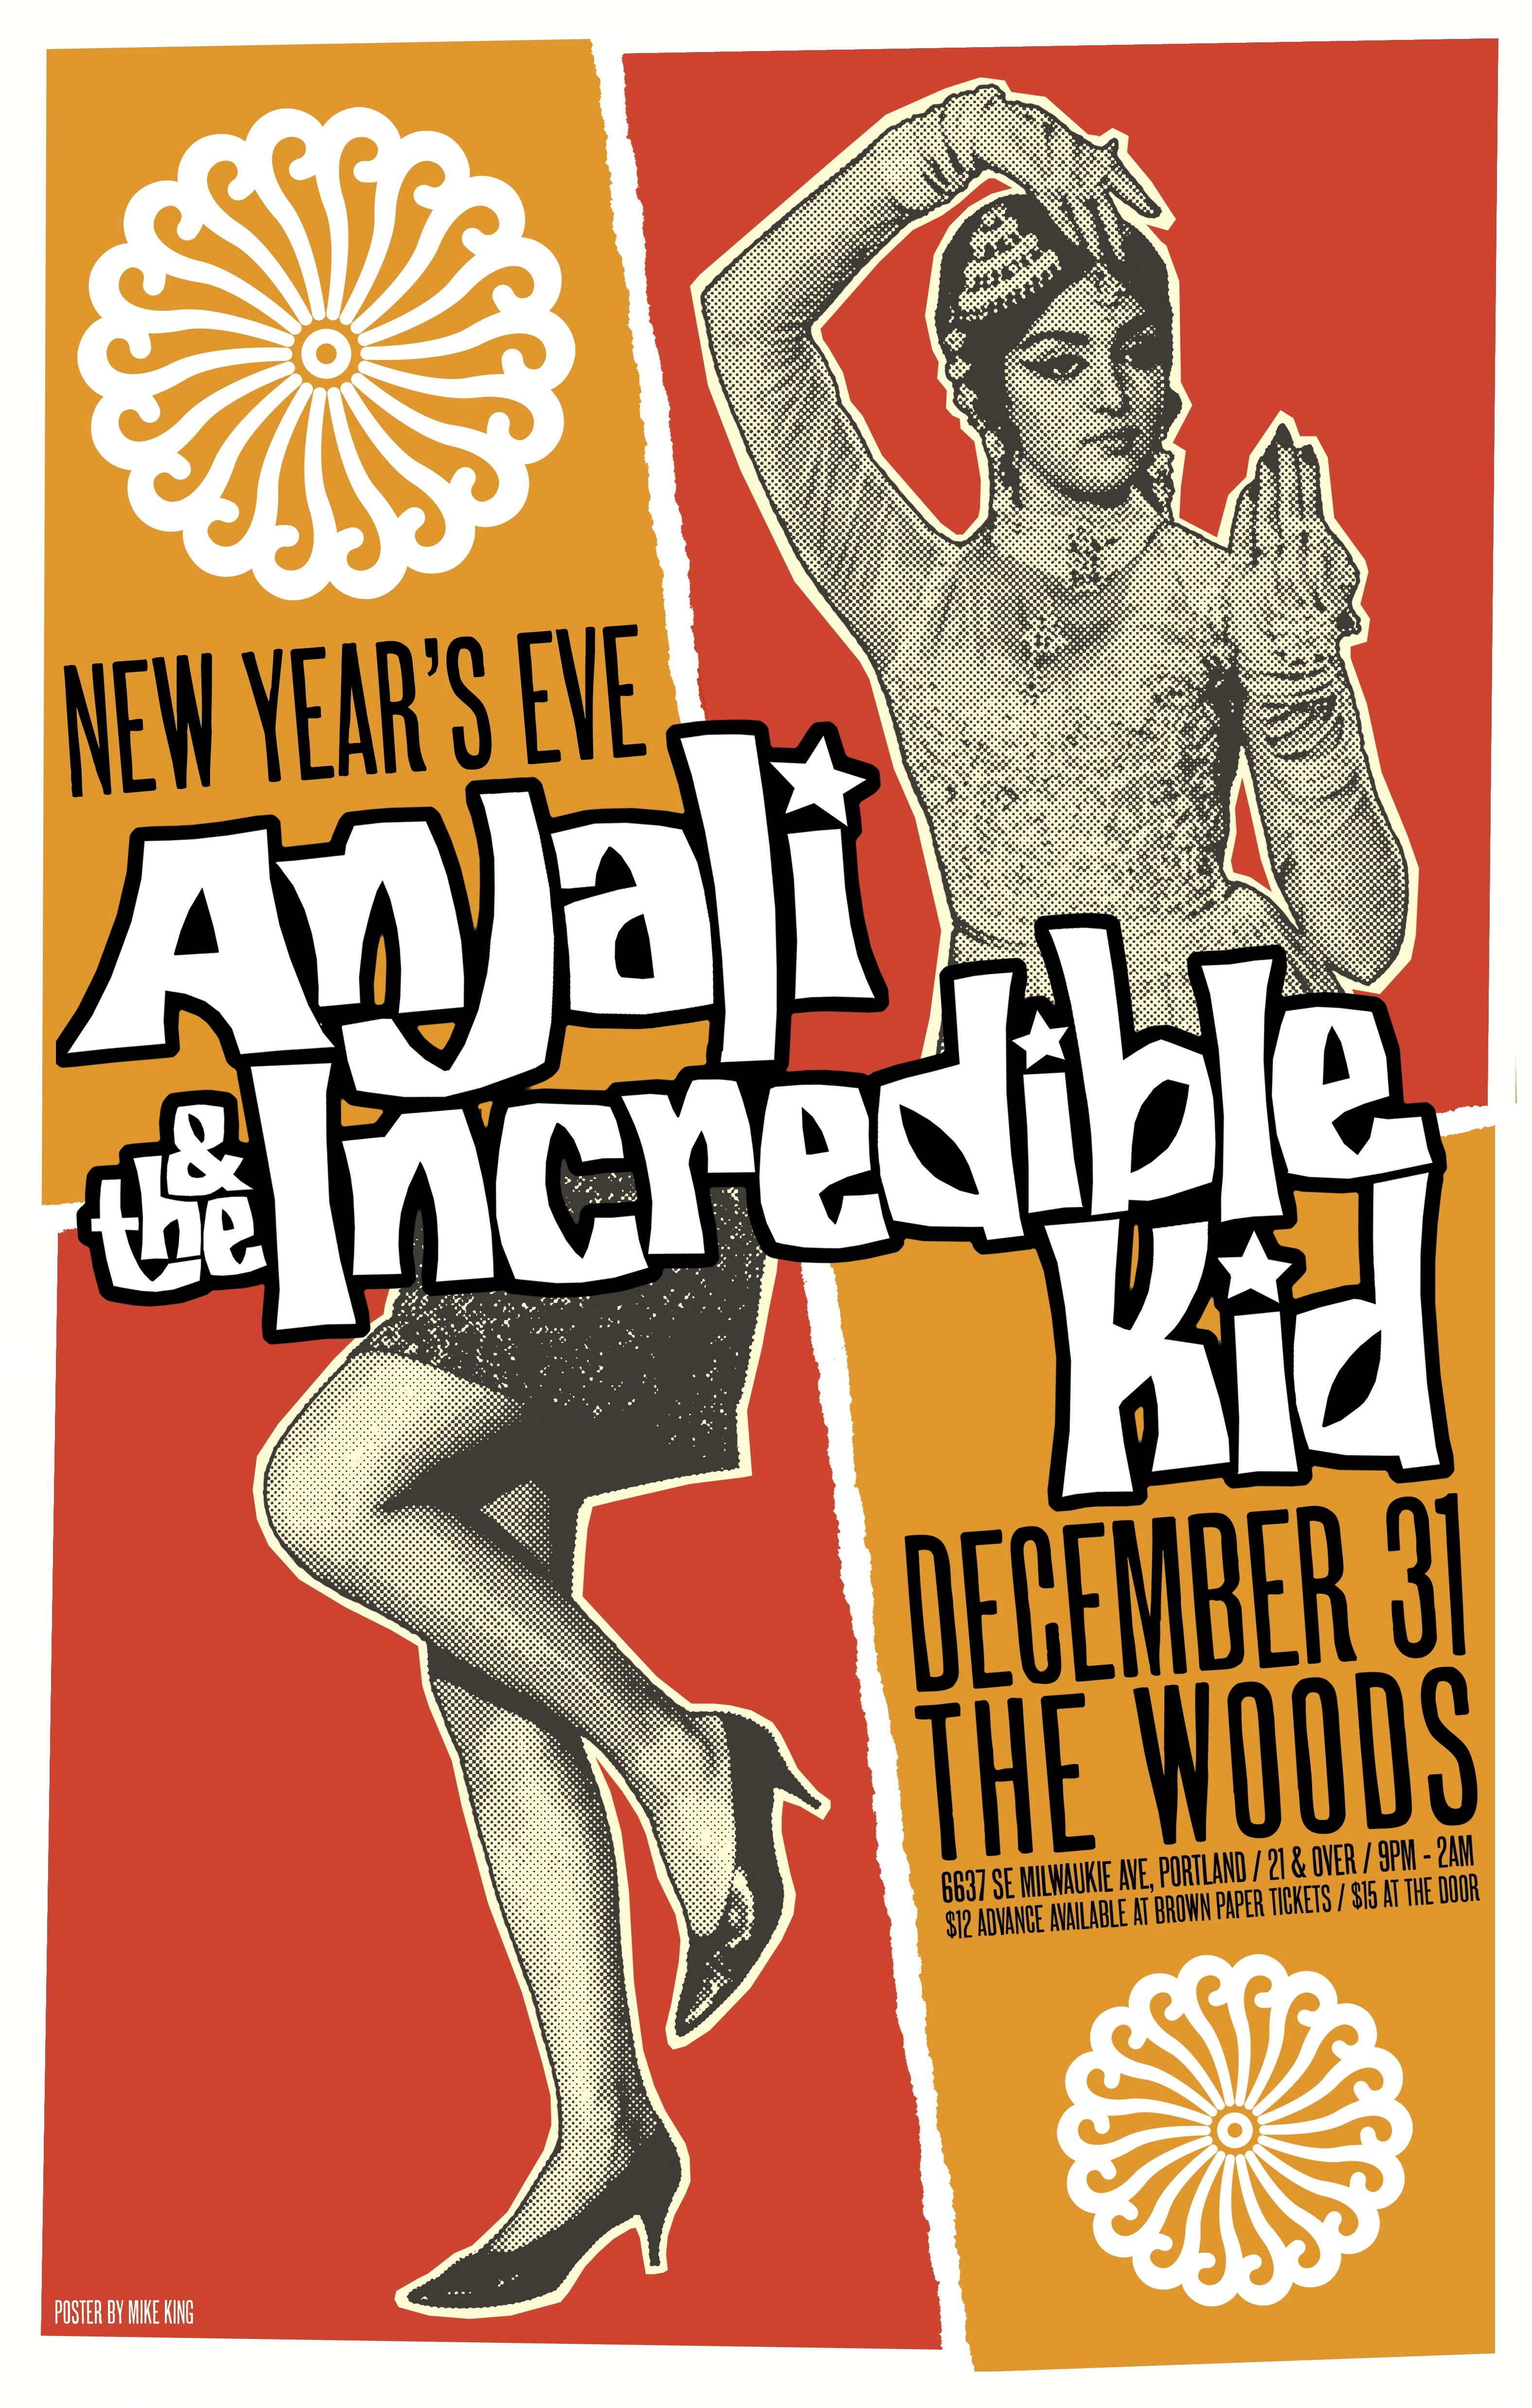 MXP-96.2 Anjali & The Incredible Kid 2010 Woods  Dec 31 Concert Poster